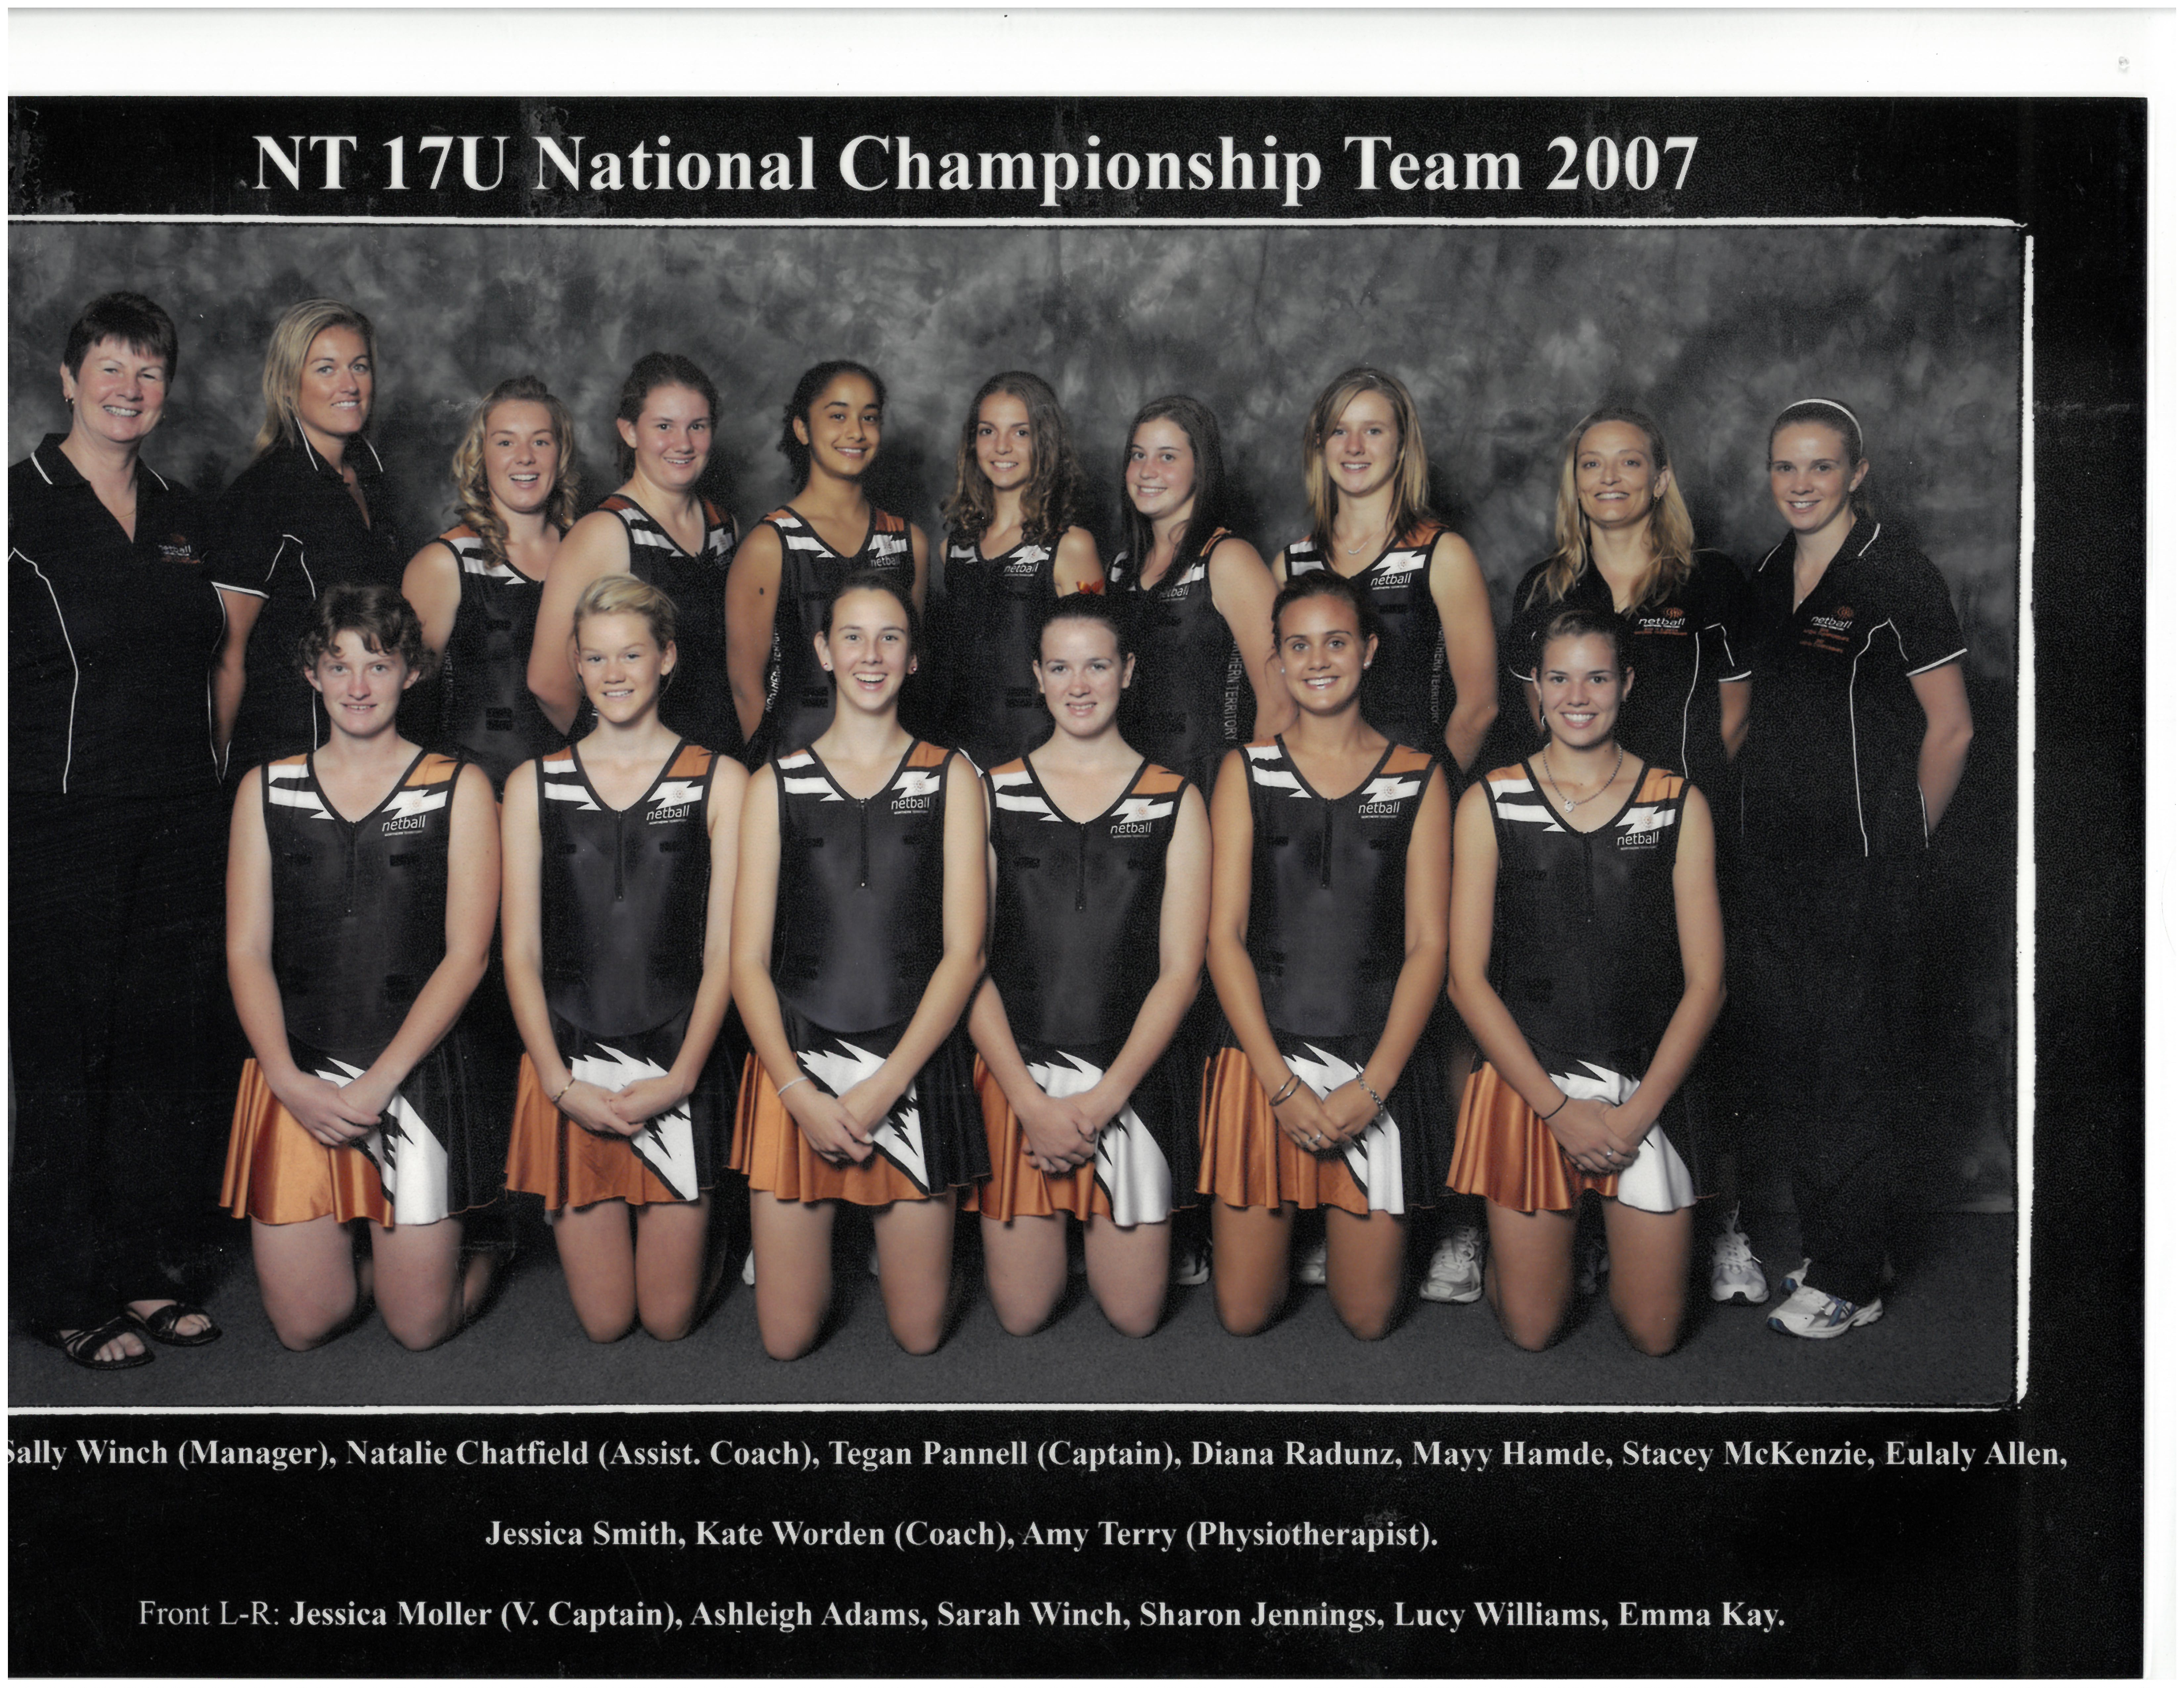 Netball NT State Team 2007 - 17U Team Photo with Names